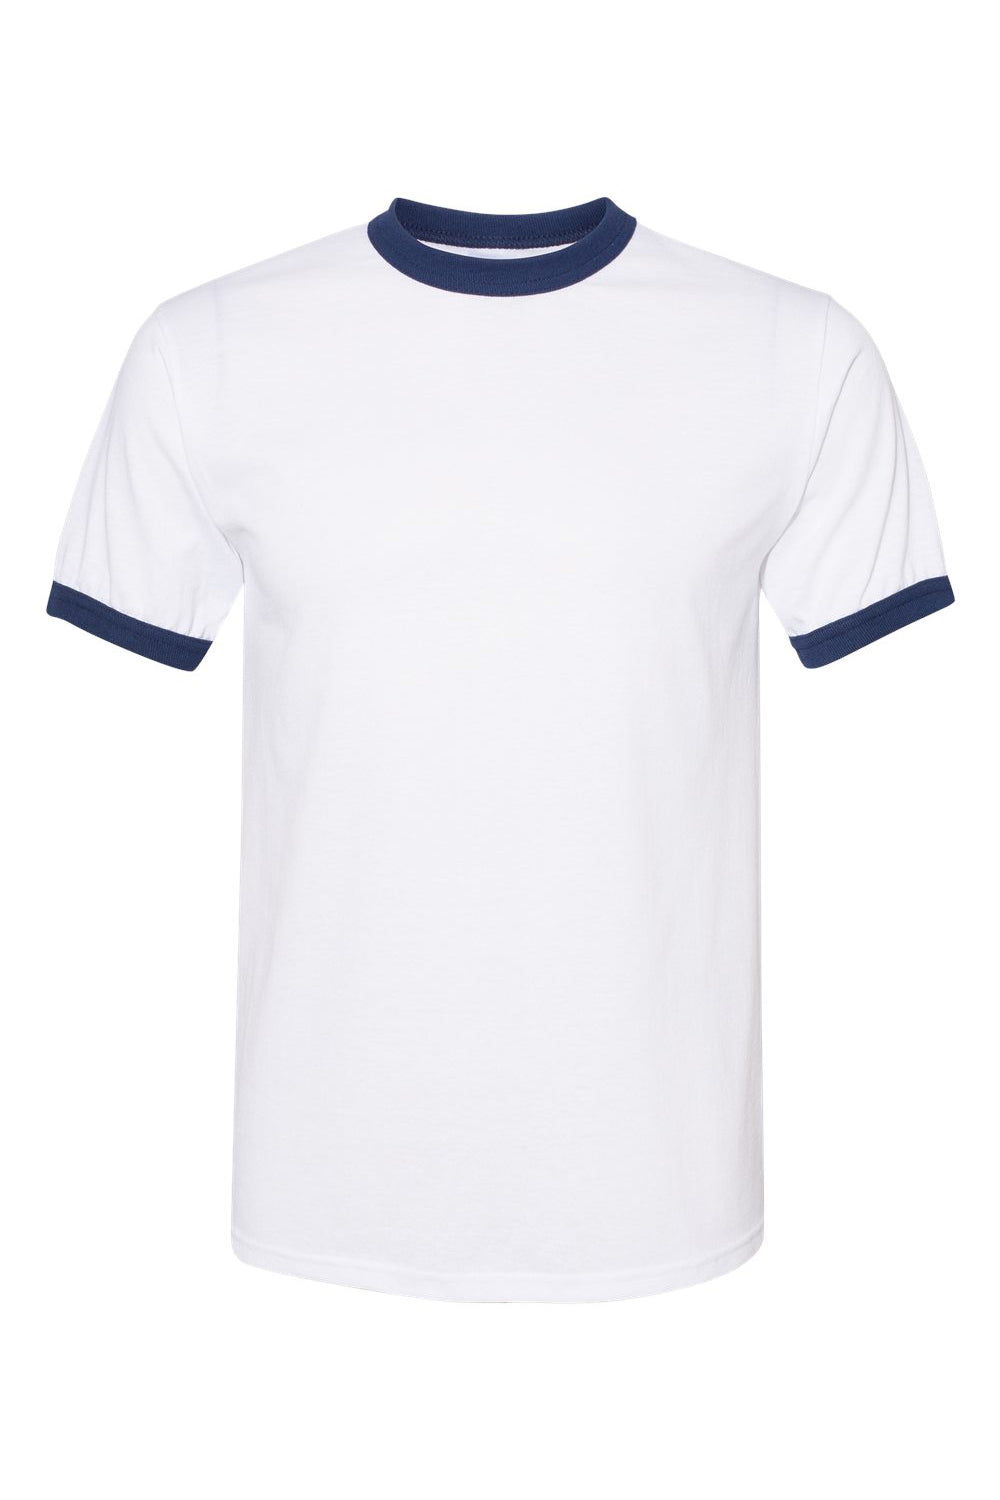 Augusta Sportswear 710 Mens Ringer Short Sleeve Crewneck T-Shirt White/Navy Blue Flat Front